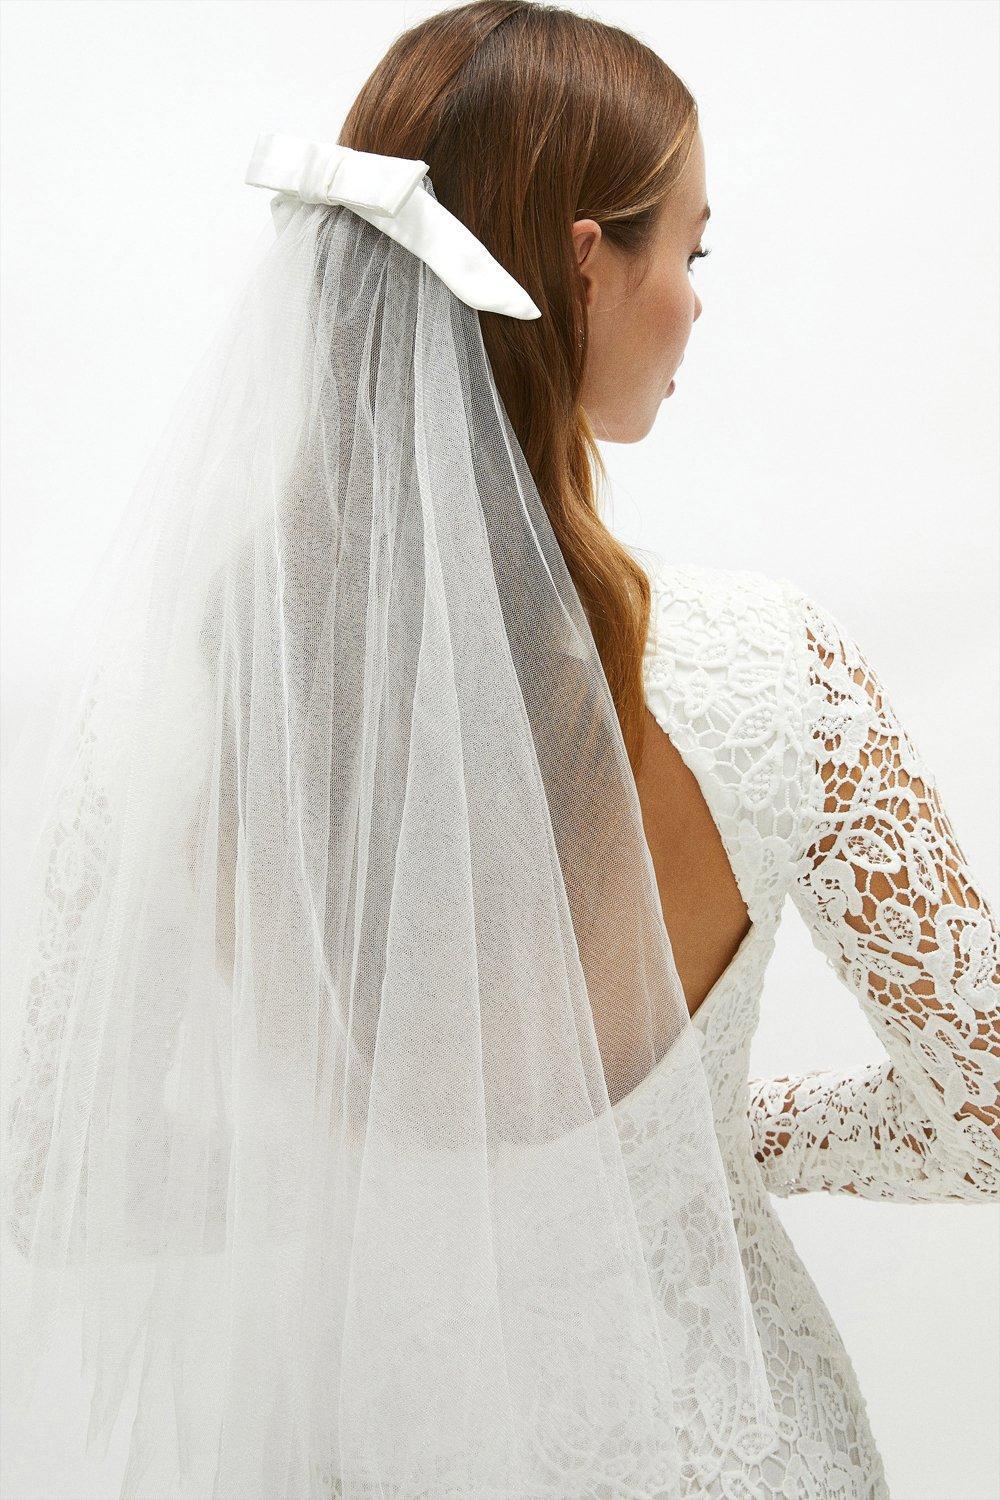 11 Popular Wedding Veil Styles & Lengths, Explained